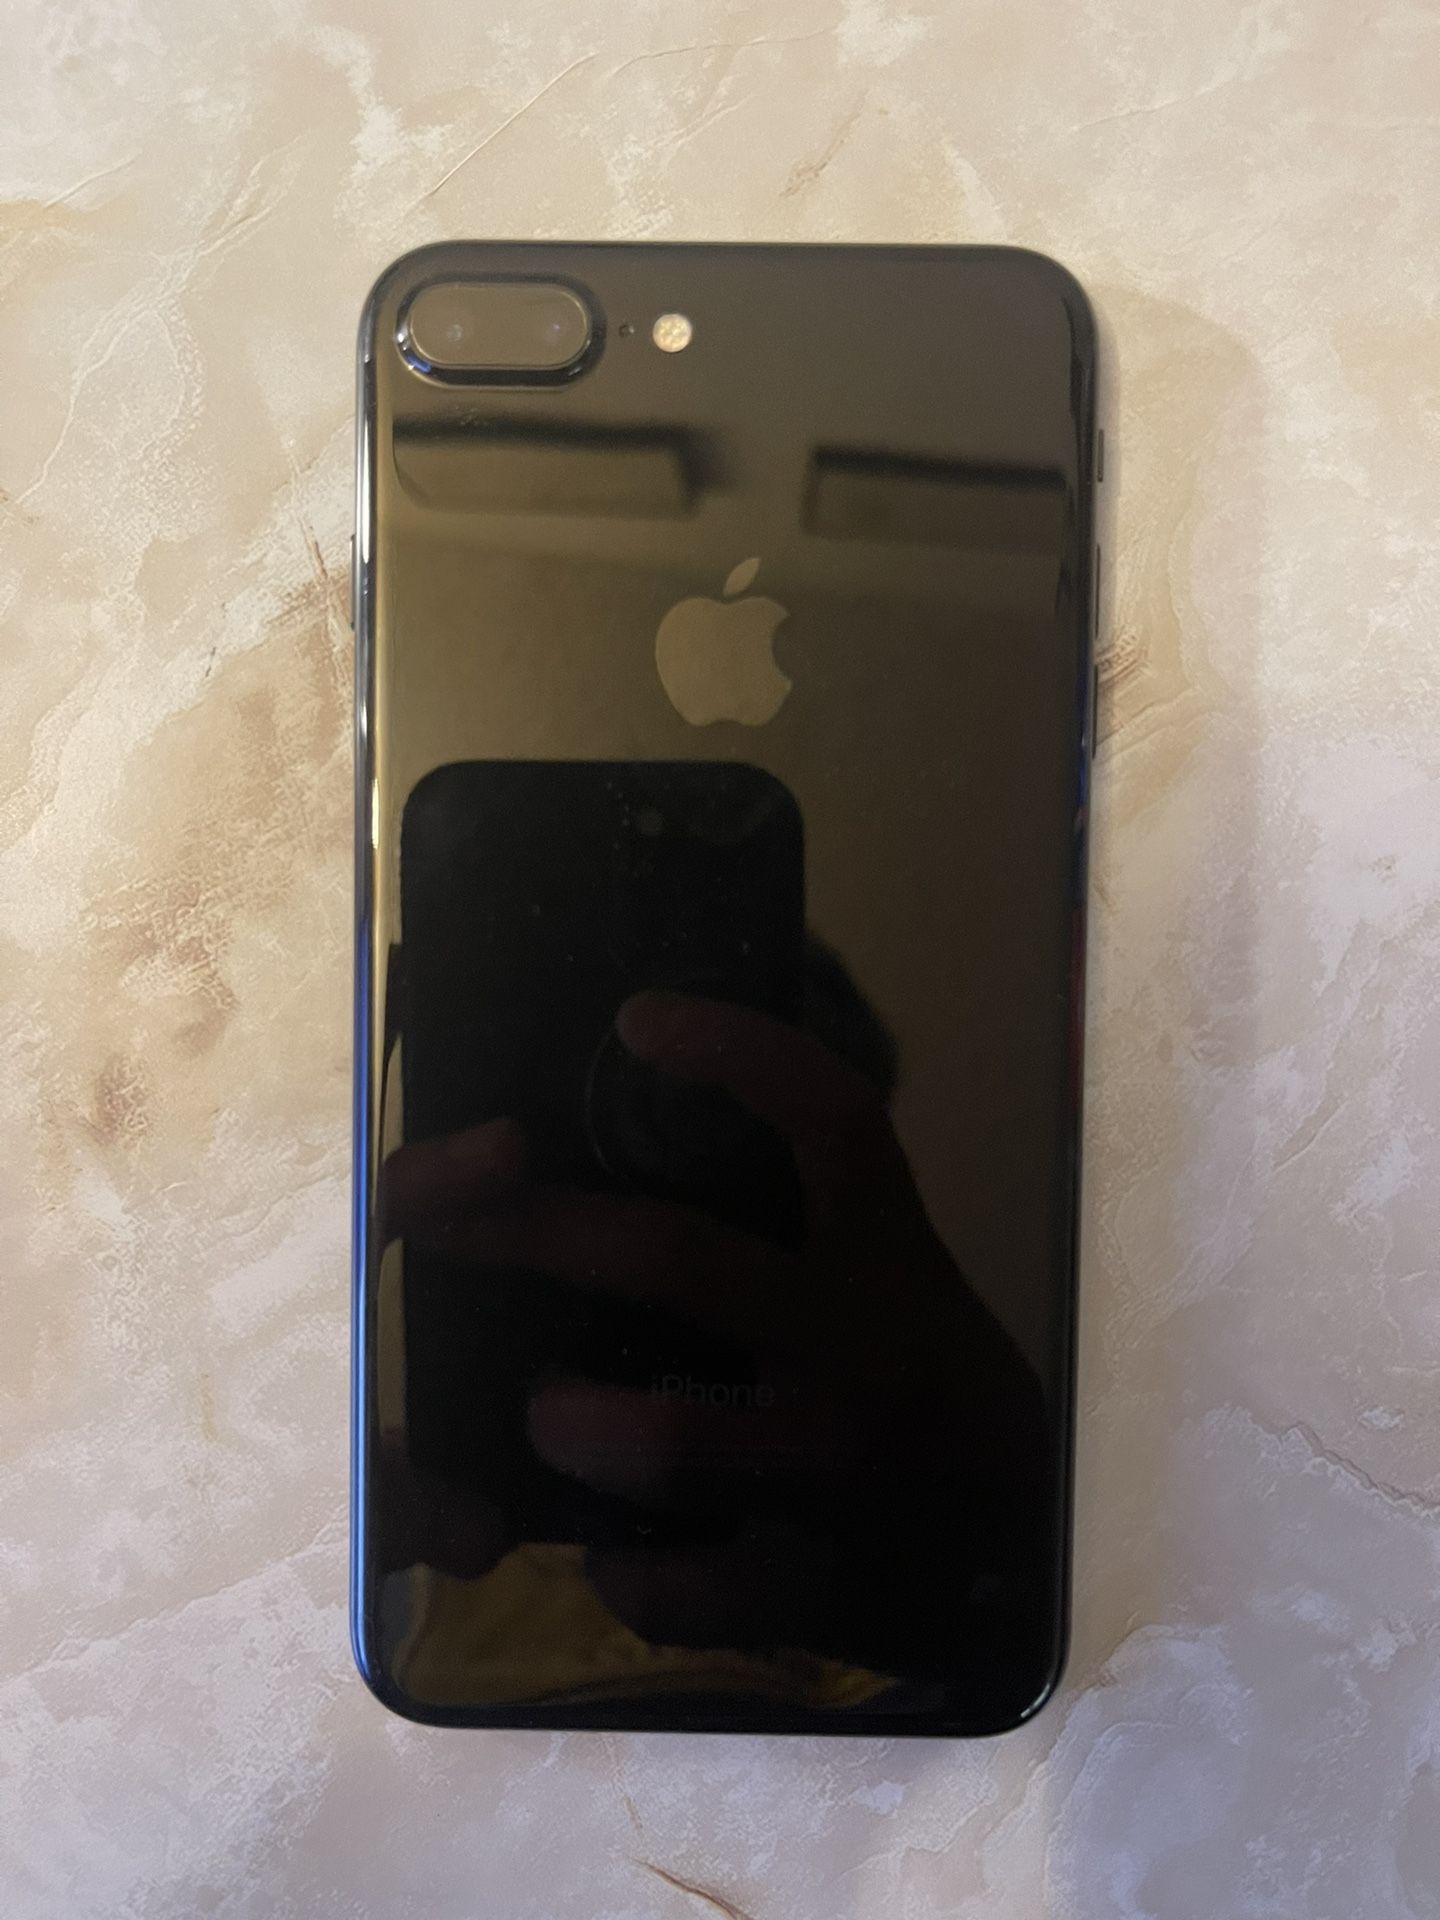 iPhone 7+ Jet Black - Refurbished $300